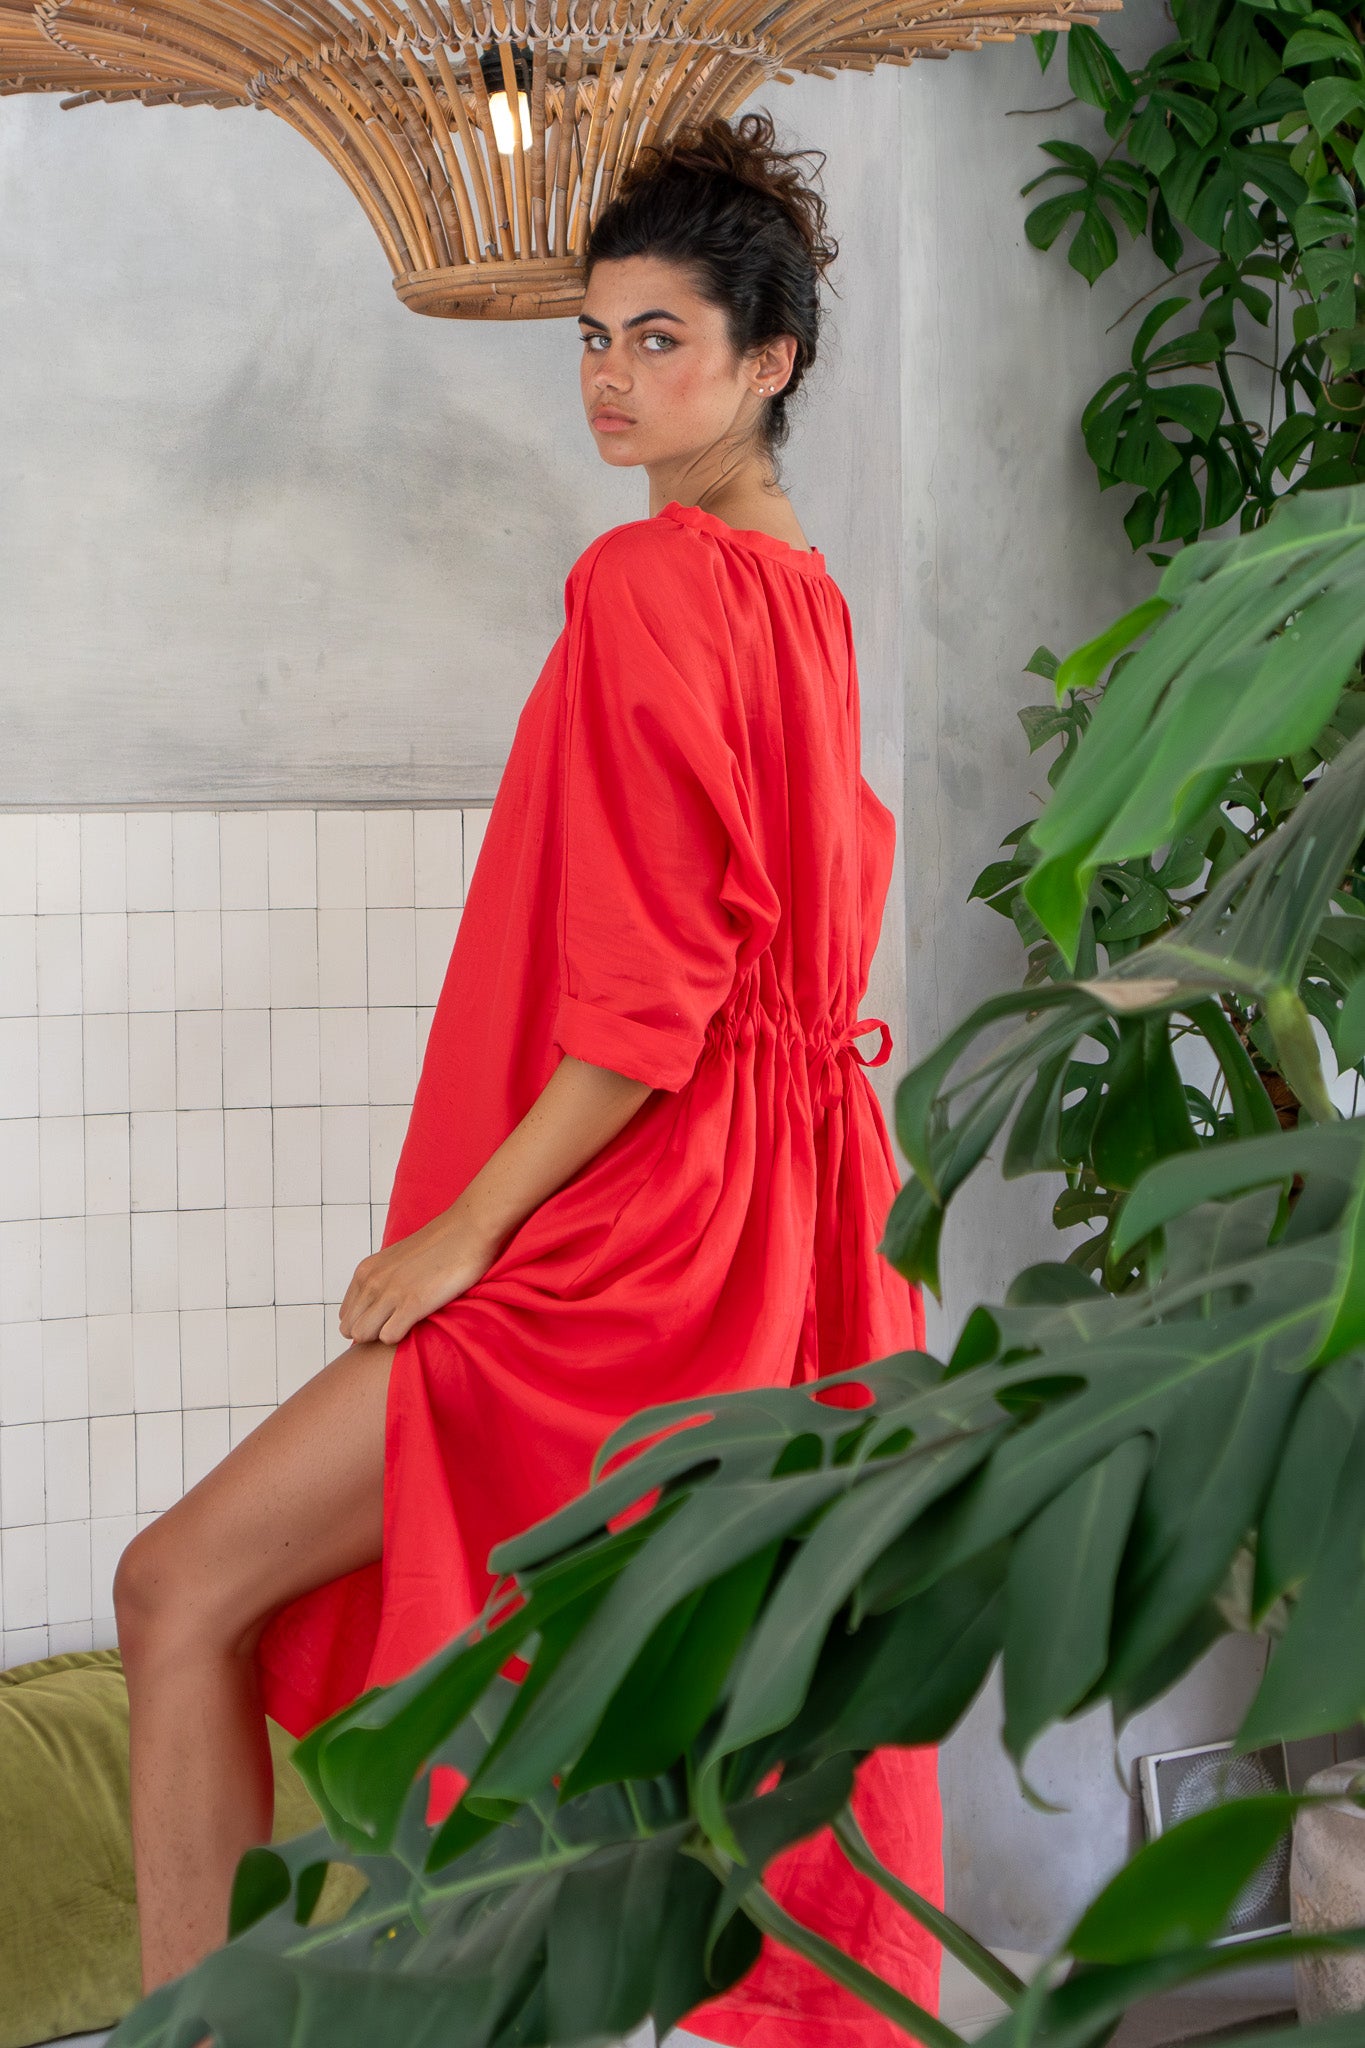 Beautiful model wearing red linen dress from designer label 